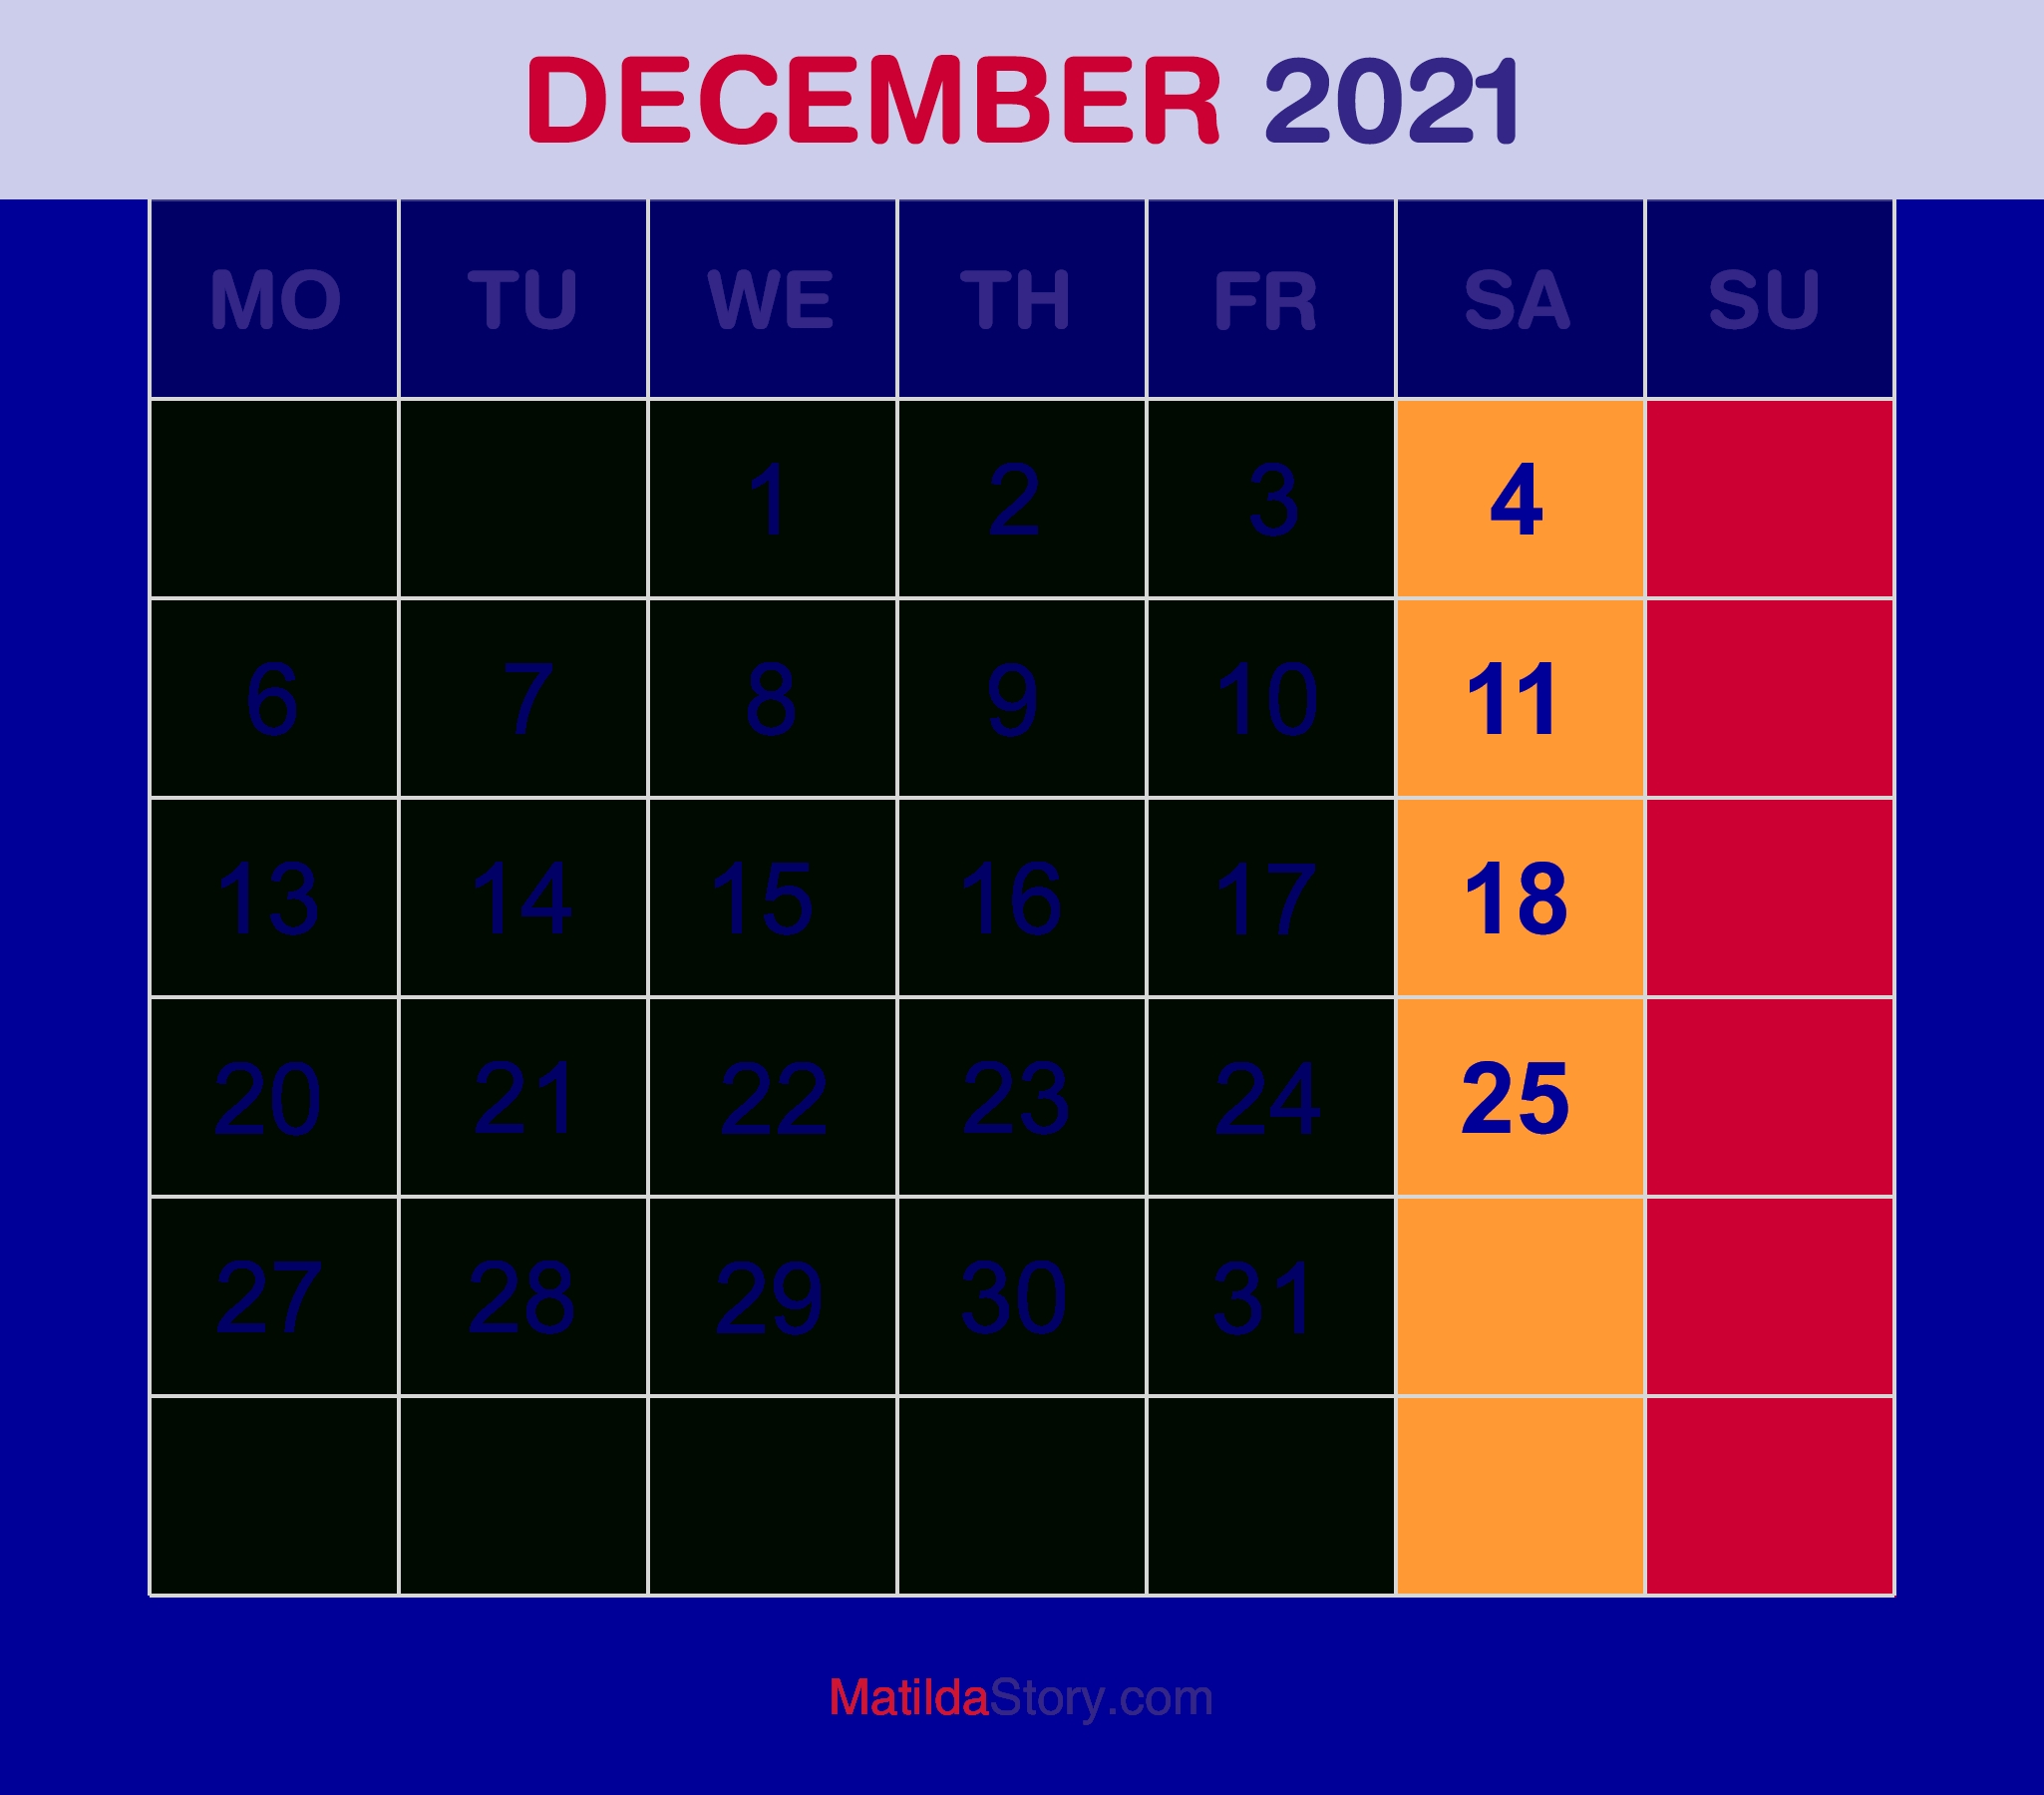 December 2021 Monthly Calendar, Monthly Planner, Printable